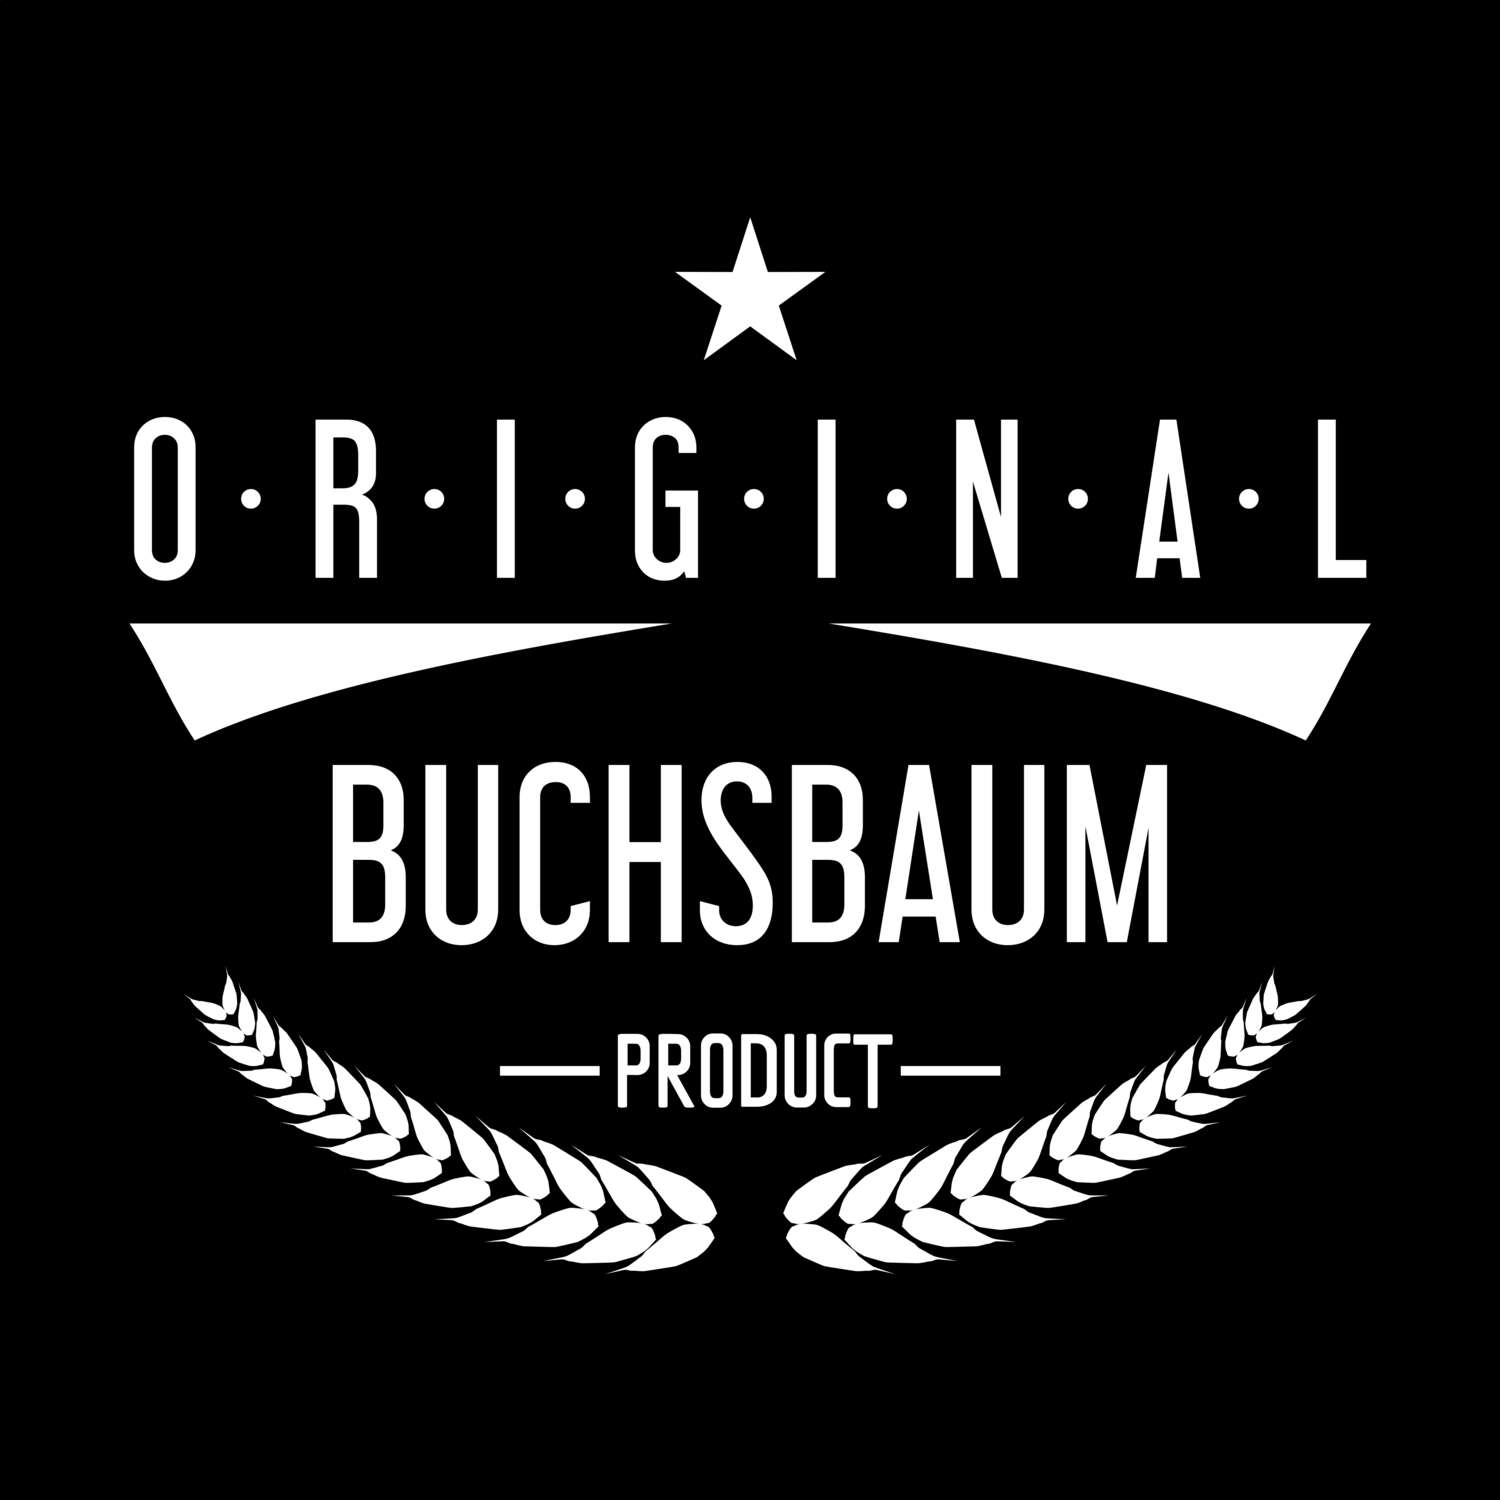 Buchsbaum T-Shirt »Original Product«